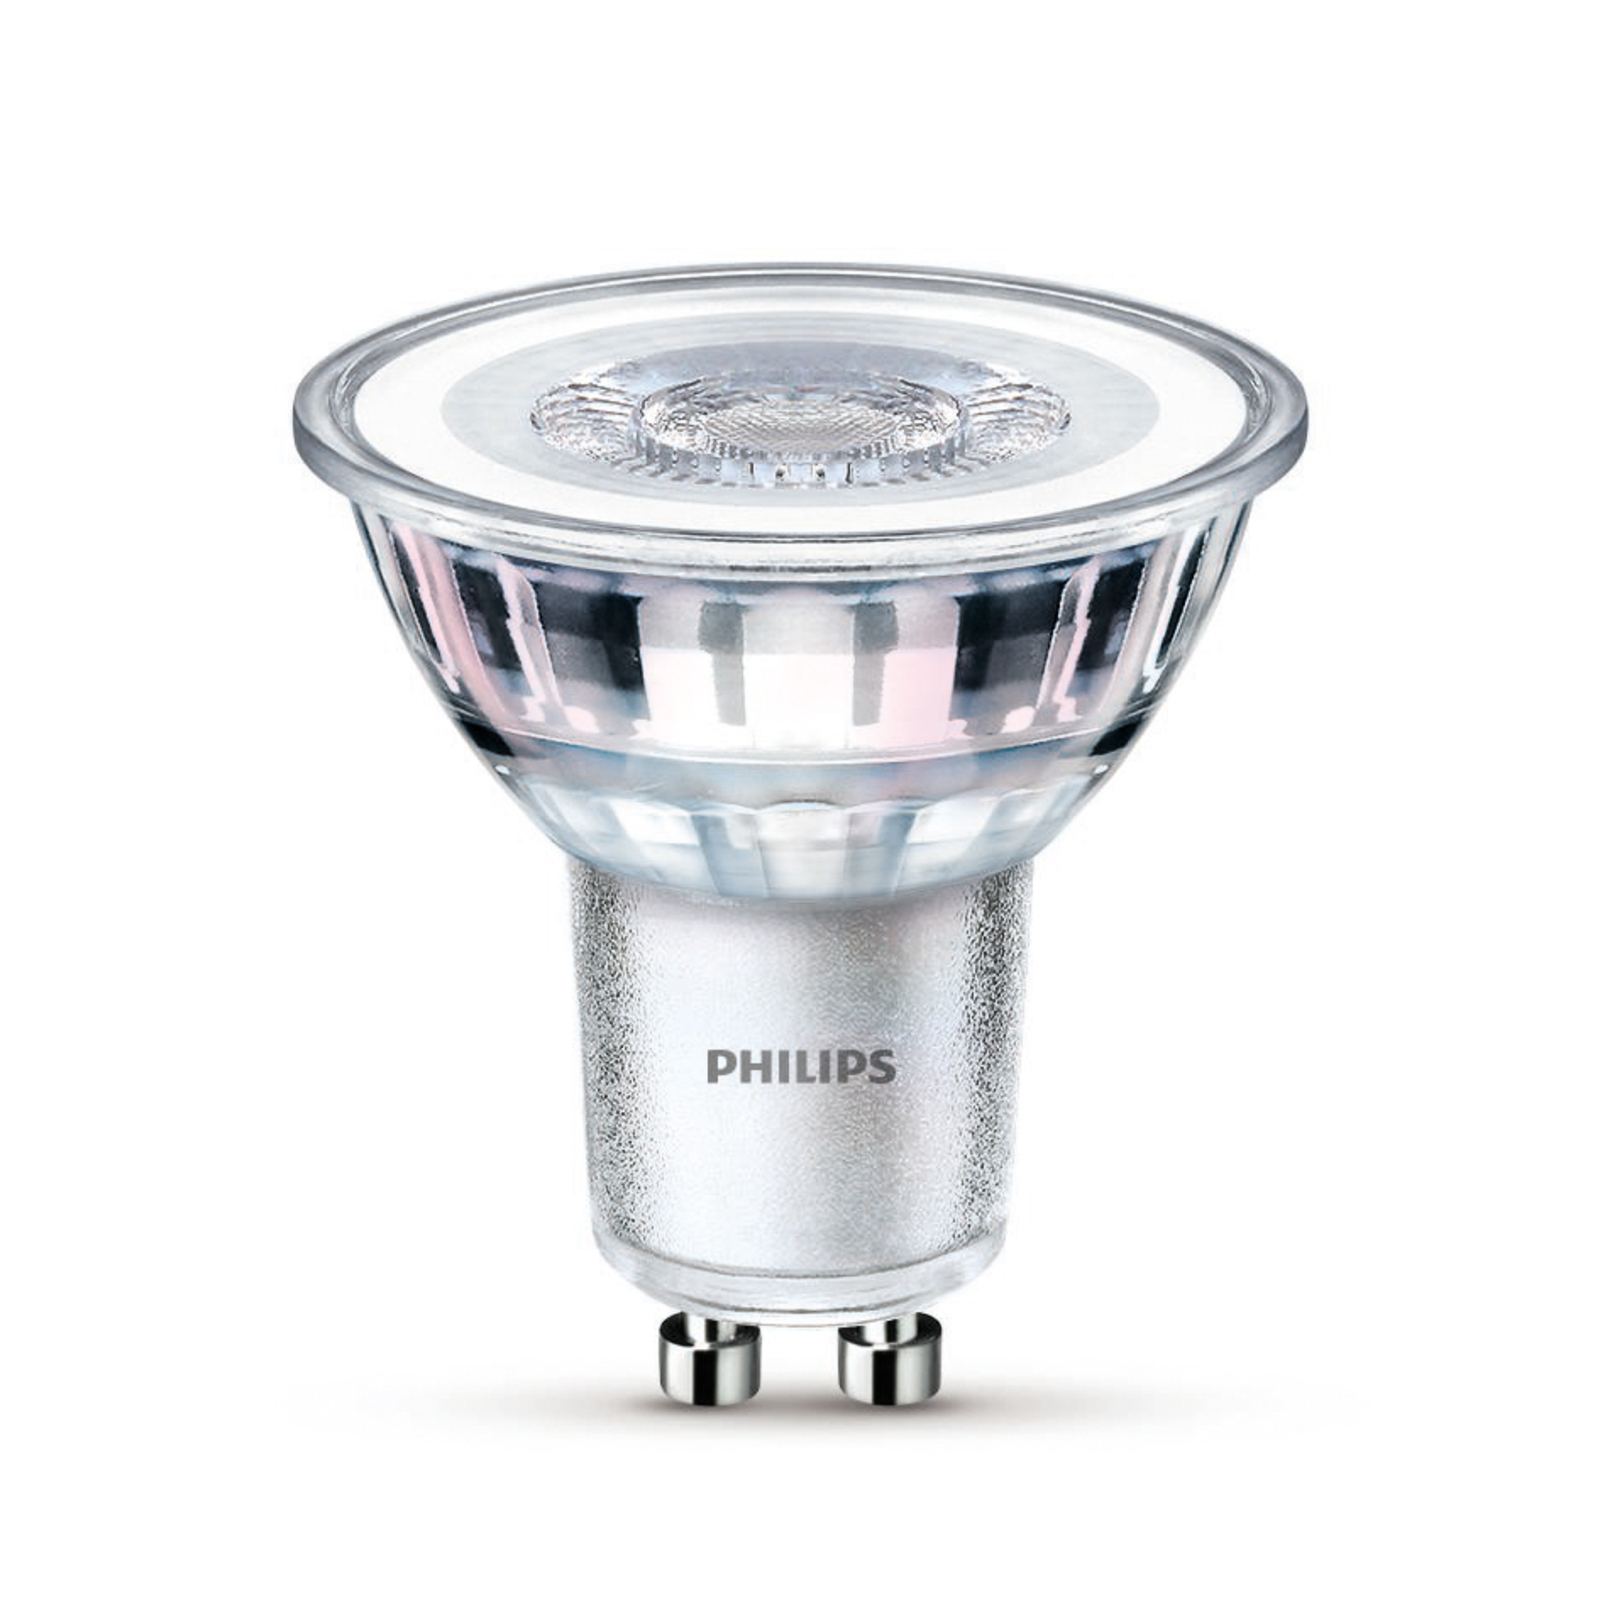 Philips LED bulb GU10 3.5W 275lm 840 clear 36° x6